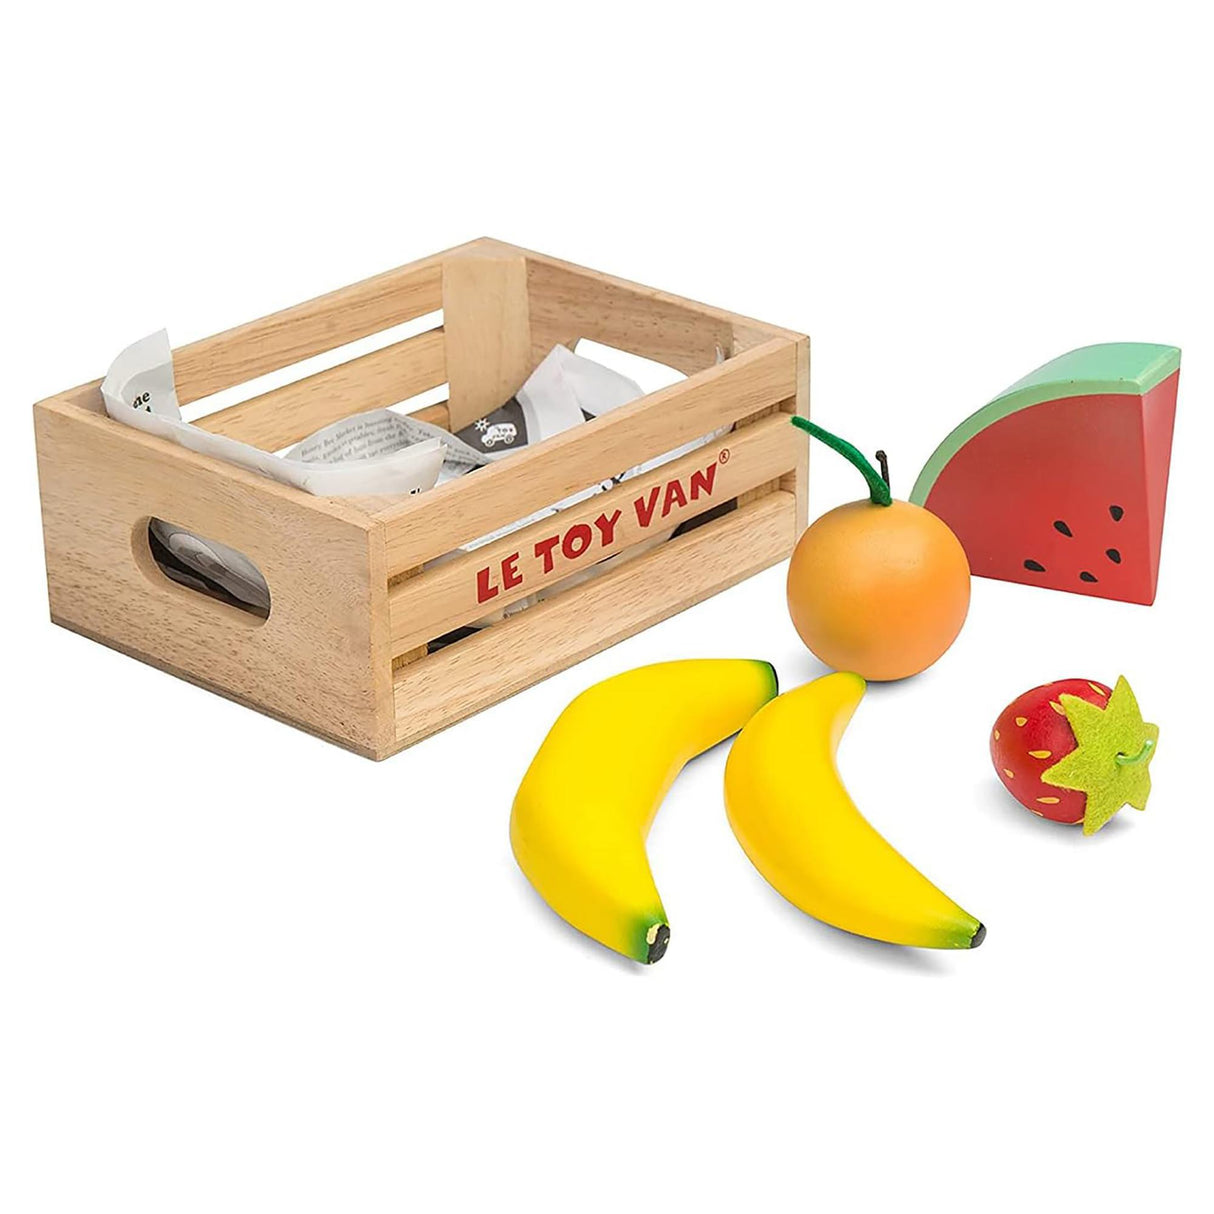 Le Toy Van Honeybake Smoothie Fruit in Crate